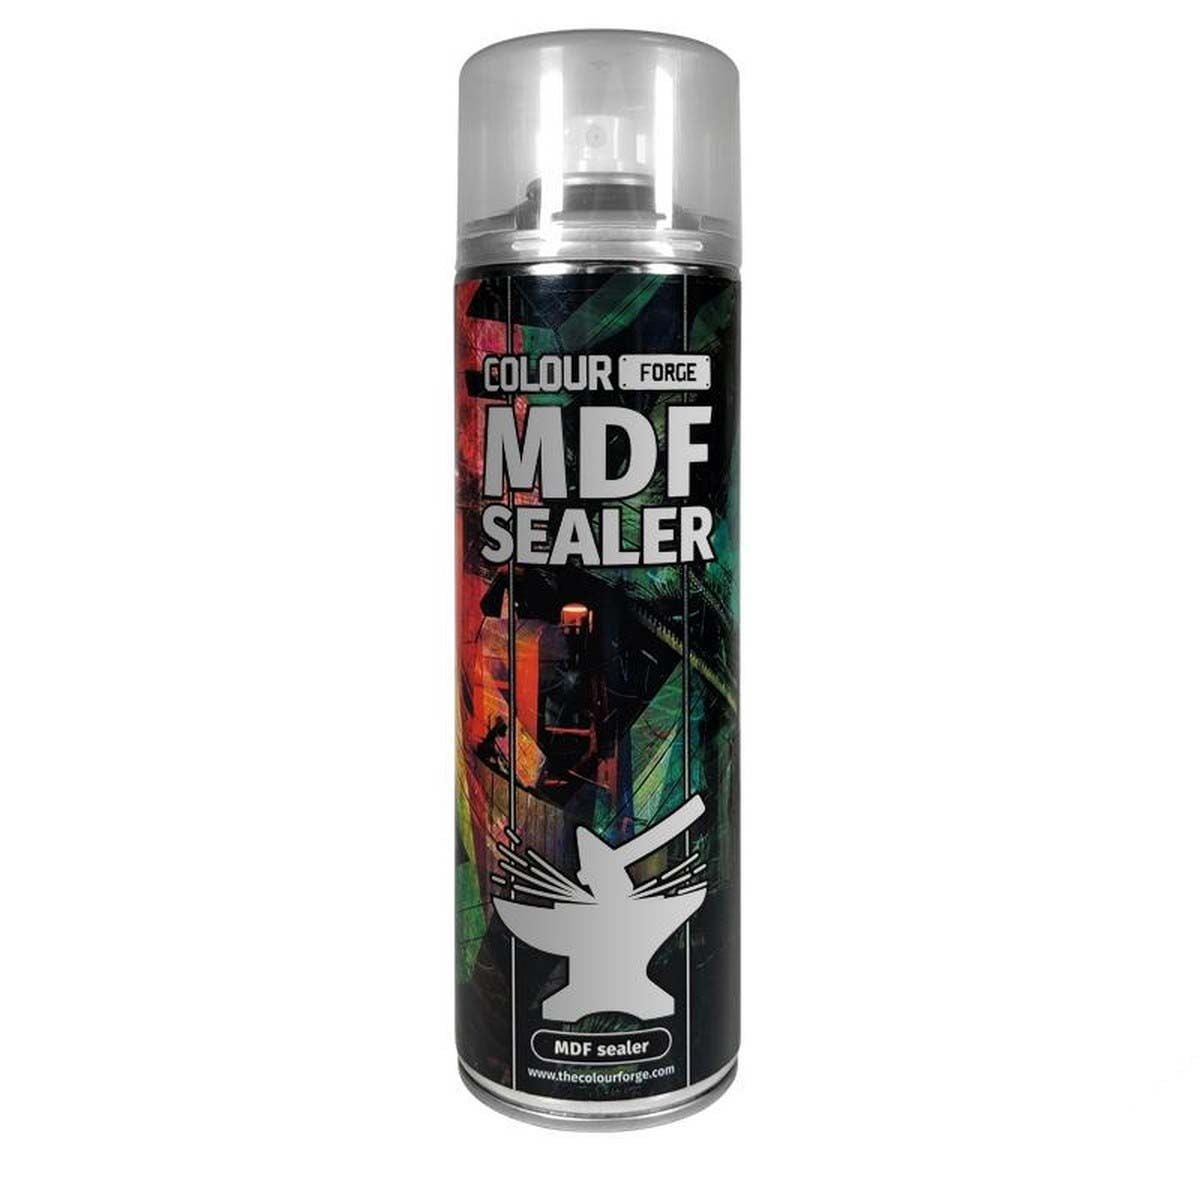 Colour Forge MDF Sealer Spray